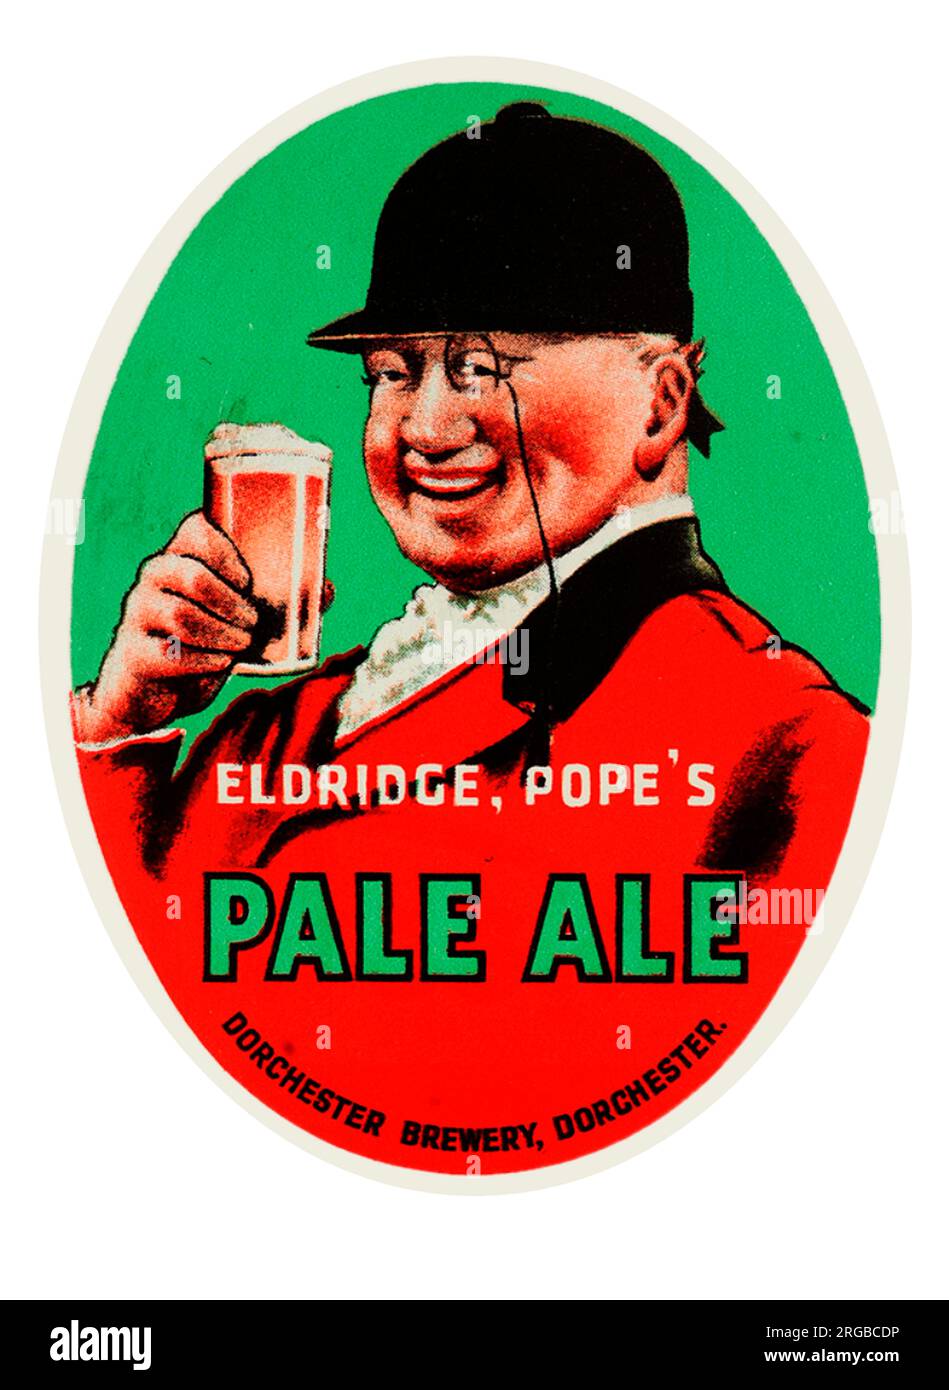 Eldridge, Pope's Pale Ale Stock Photo